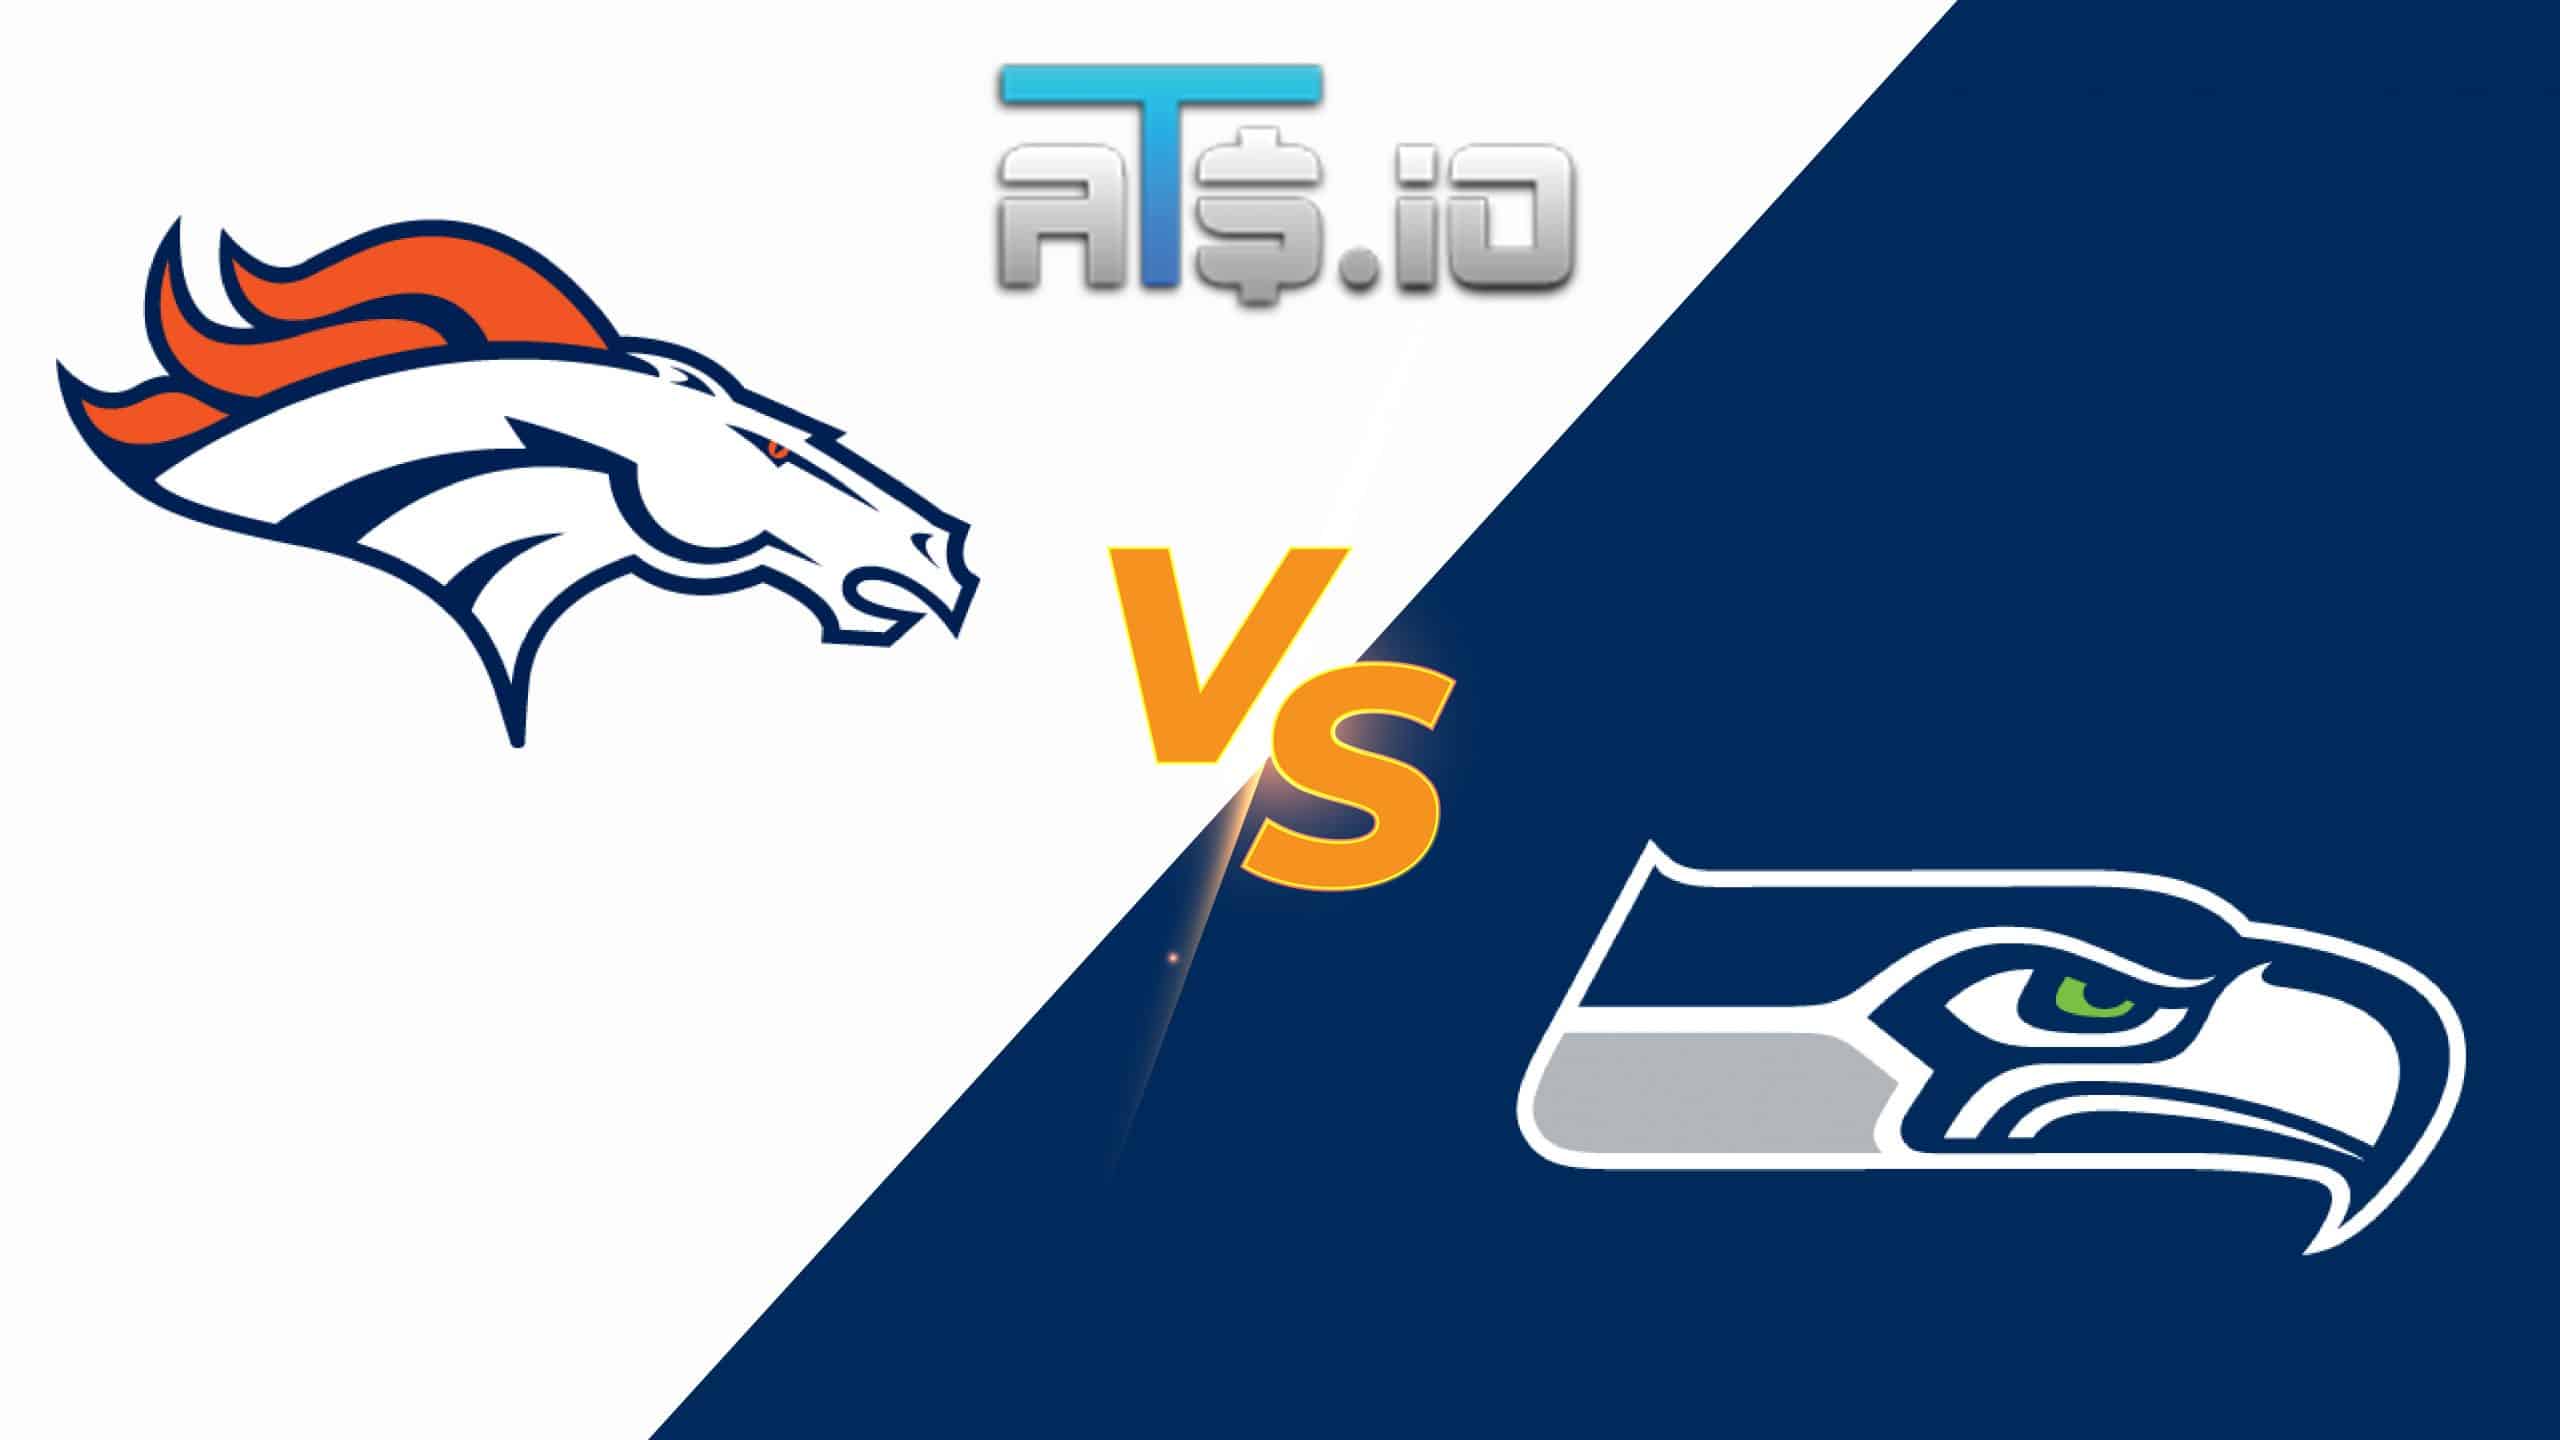 Broncos vs Seahawks Prediction, Odds & Betting Trends for NFL Week 1 Monday  Night Football on FanDuel Sportsbook